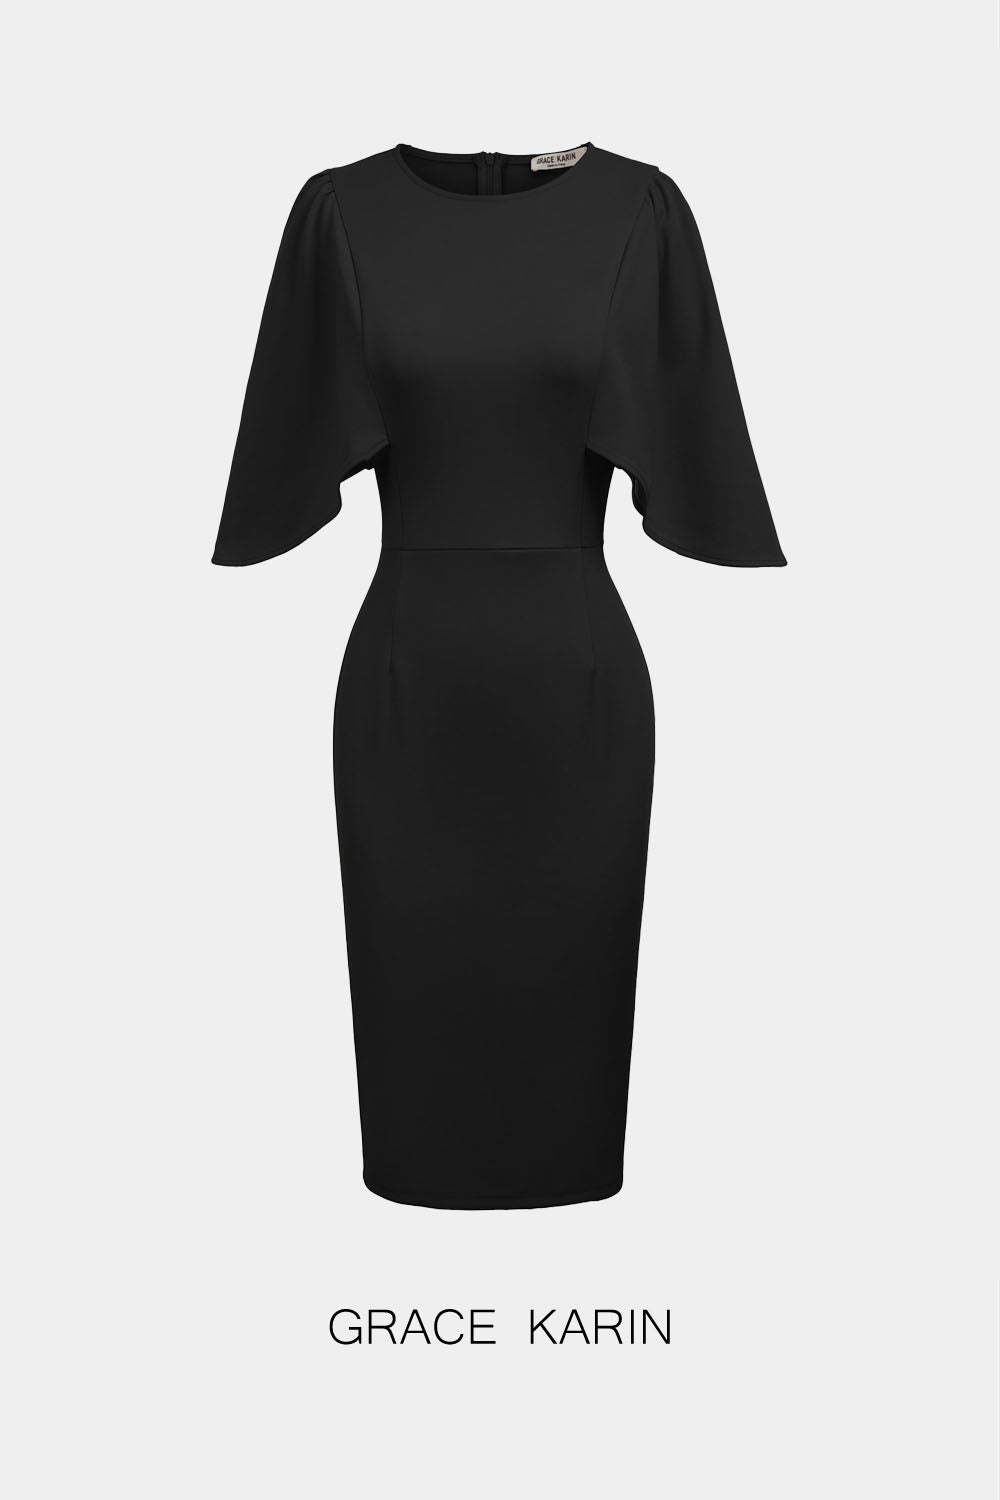 【Only $9.99】GRACE KARIN 3/4 Ruffle Sleeve Bodycon Dress